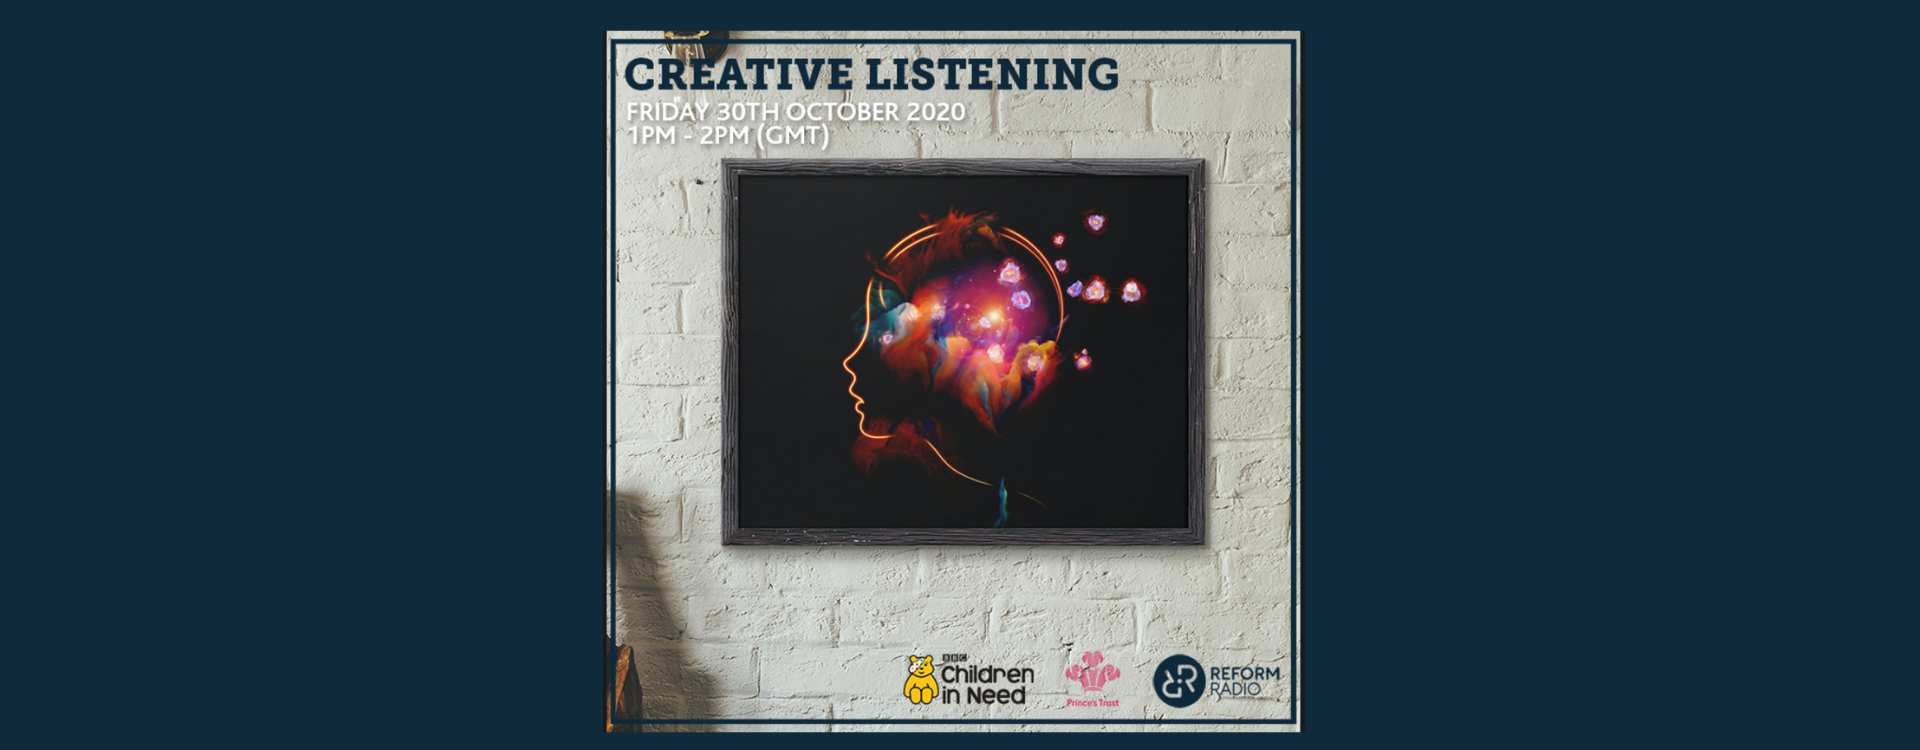 Creative Listening canva